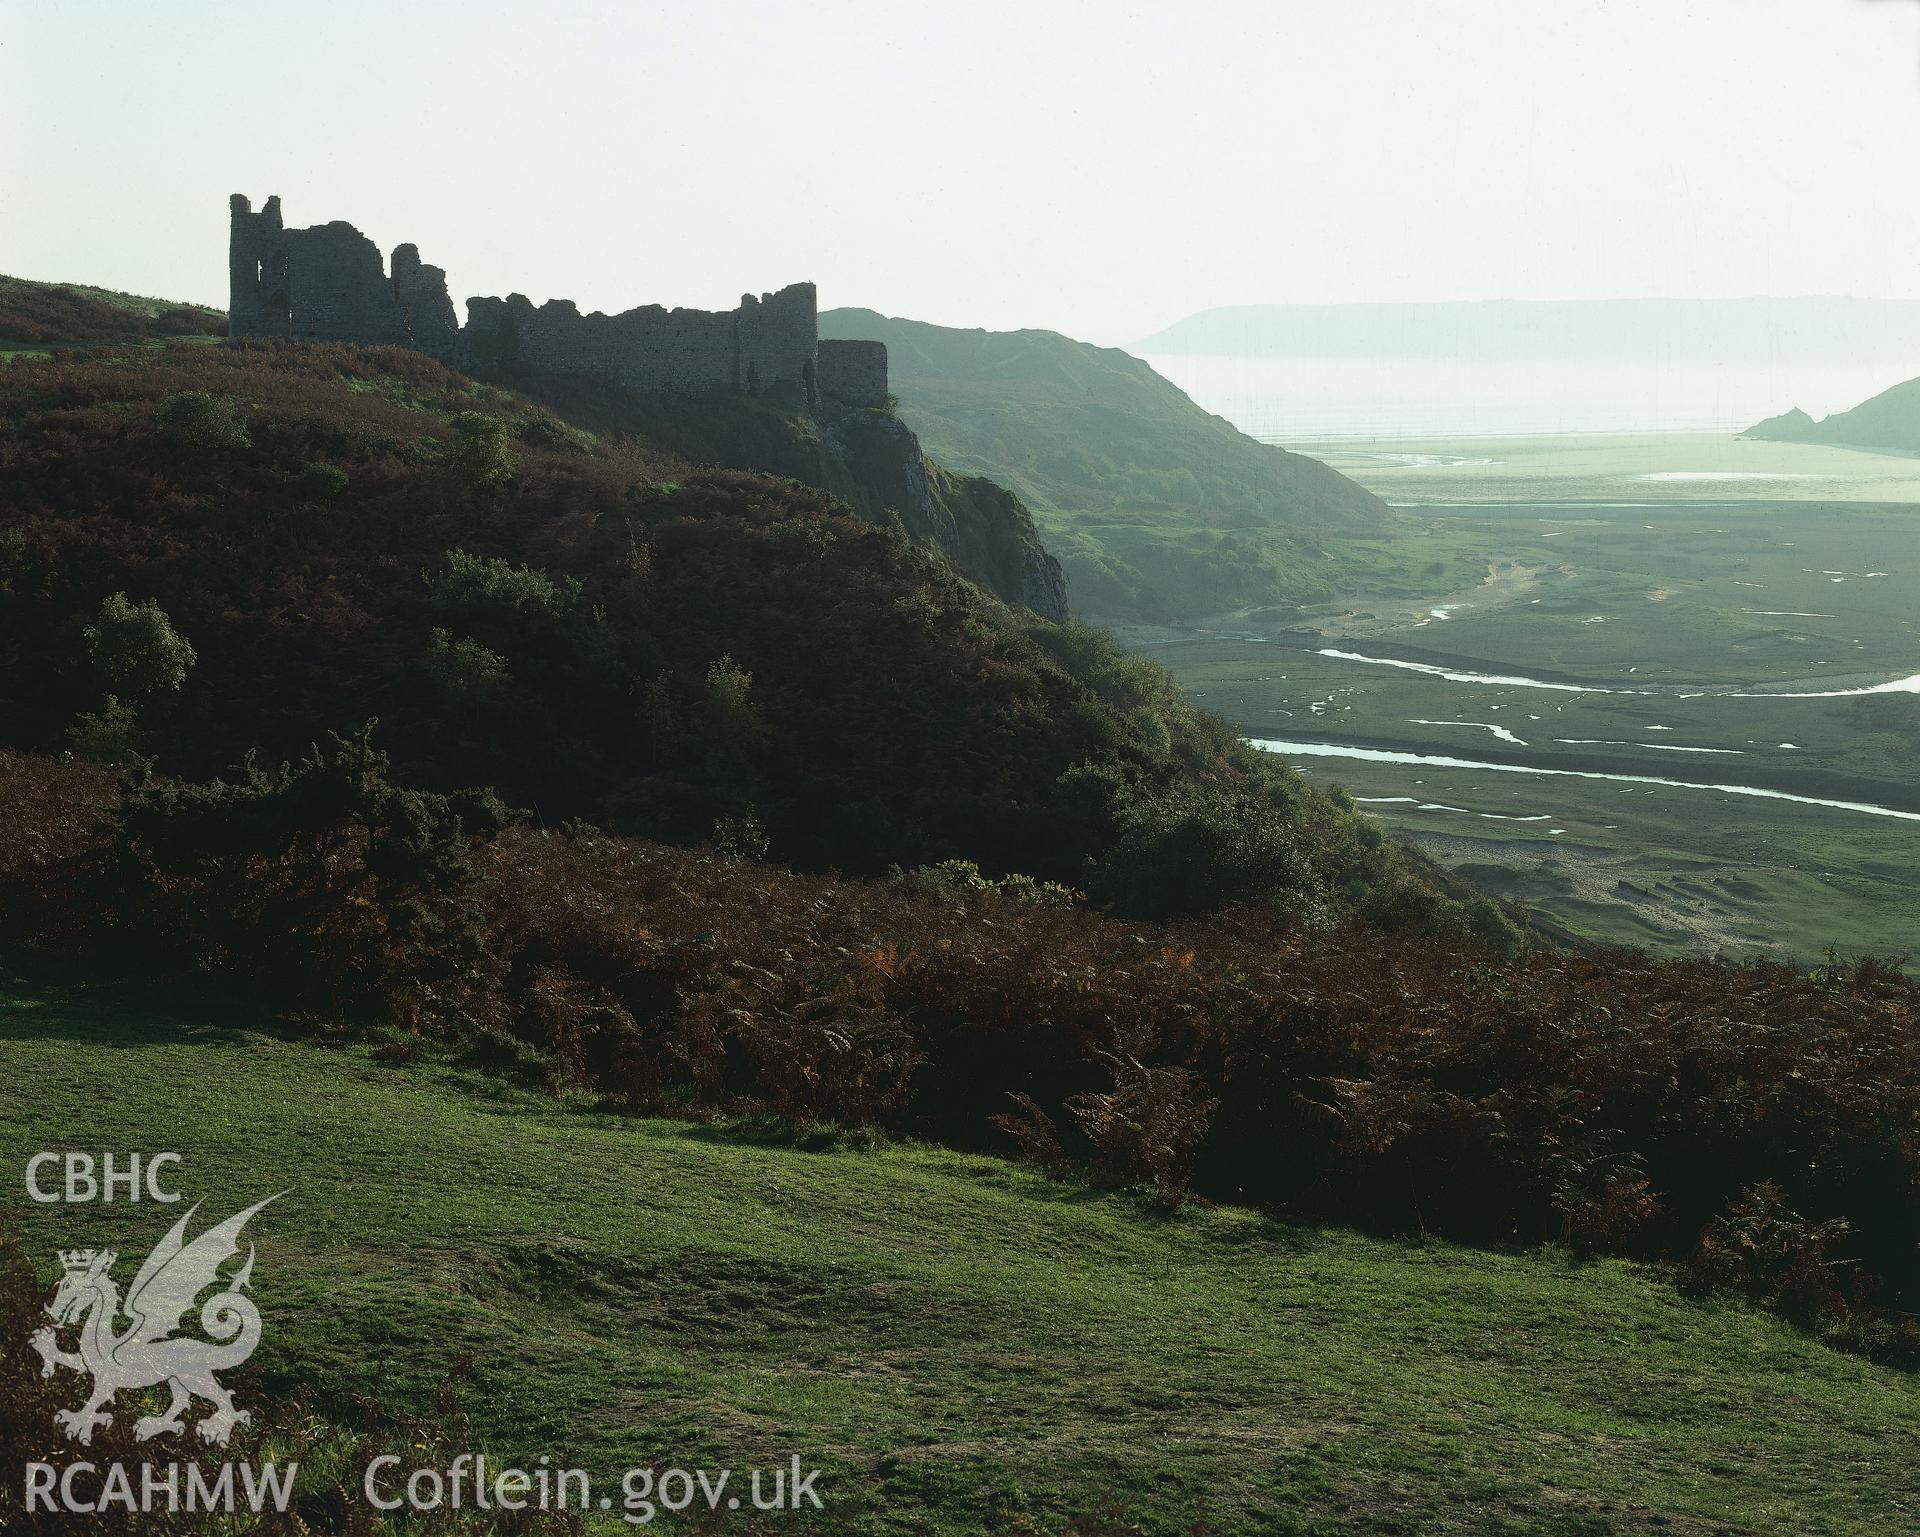 RCAHMW colour transparency showing a landscape view of Pennard Castle.